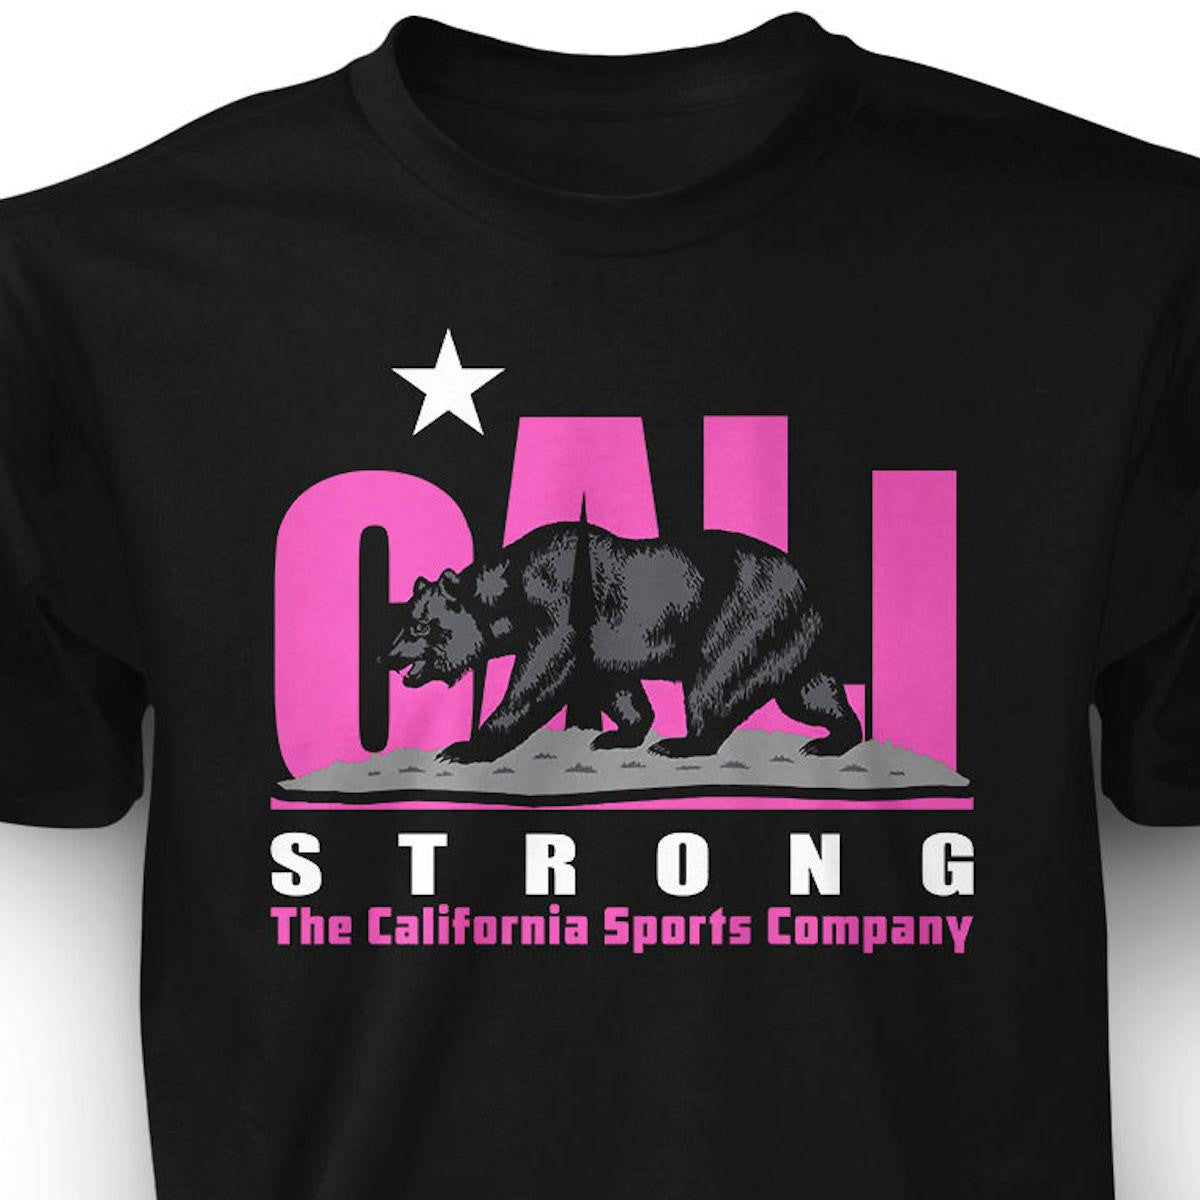 CALI Strong Original T-Shirt Pink - T-Shirt - Image 3 - CALI Strong